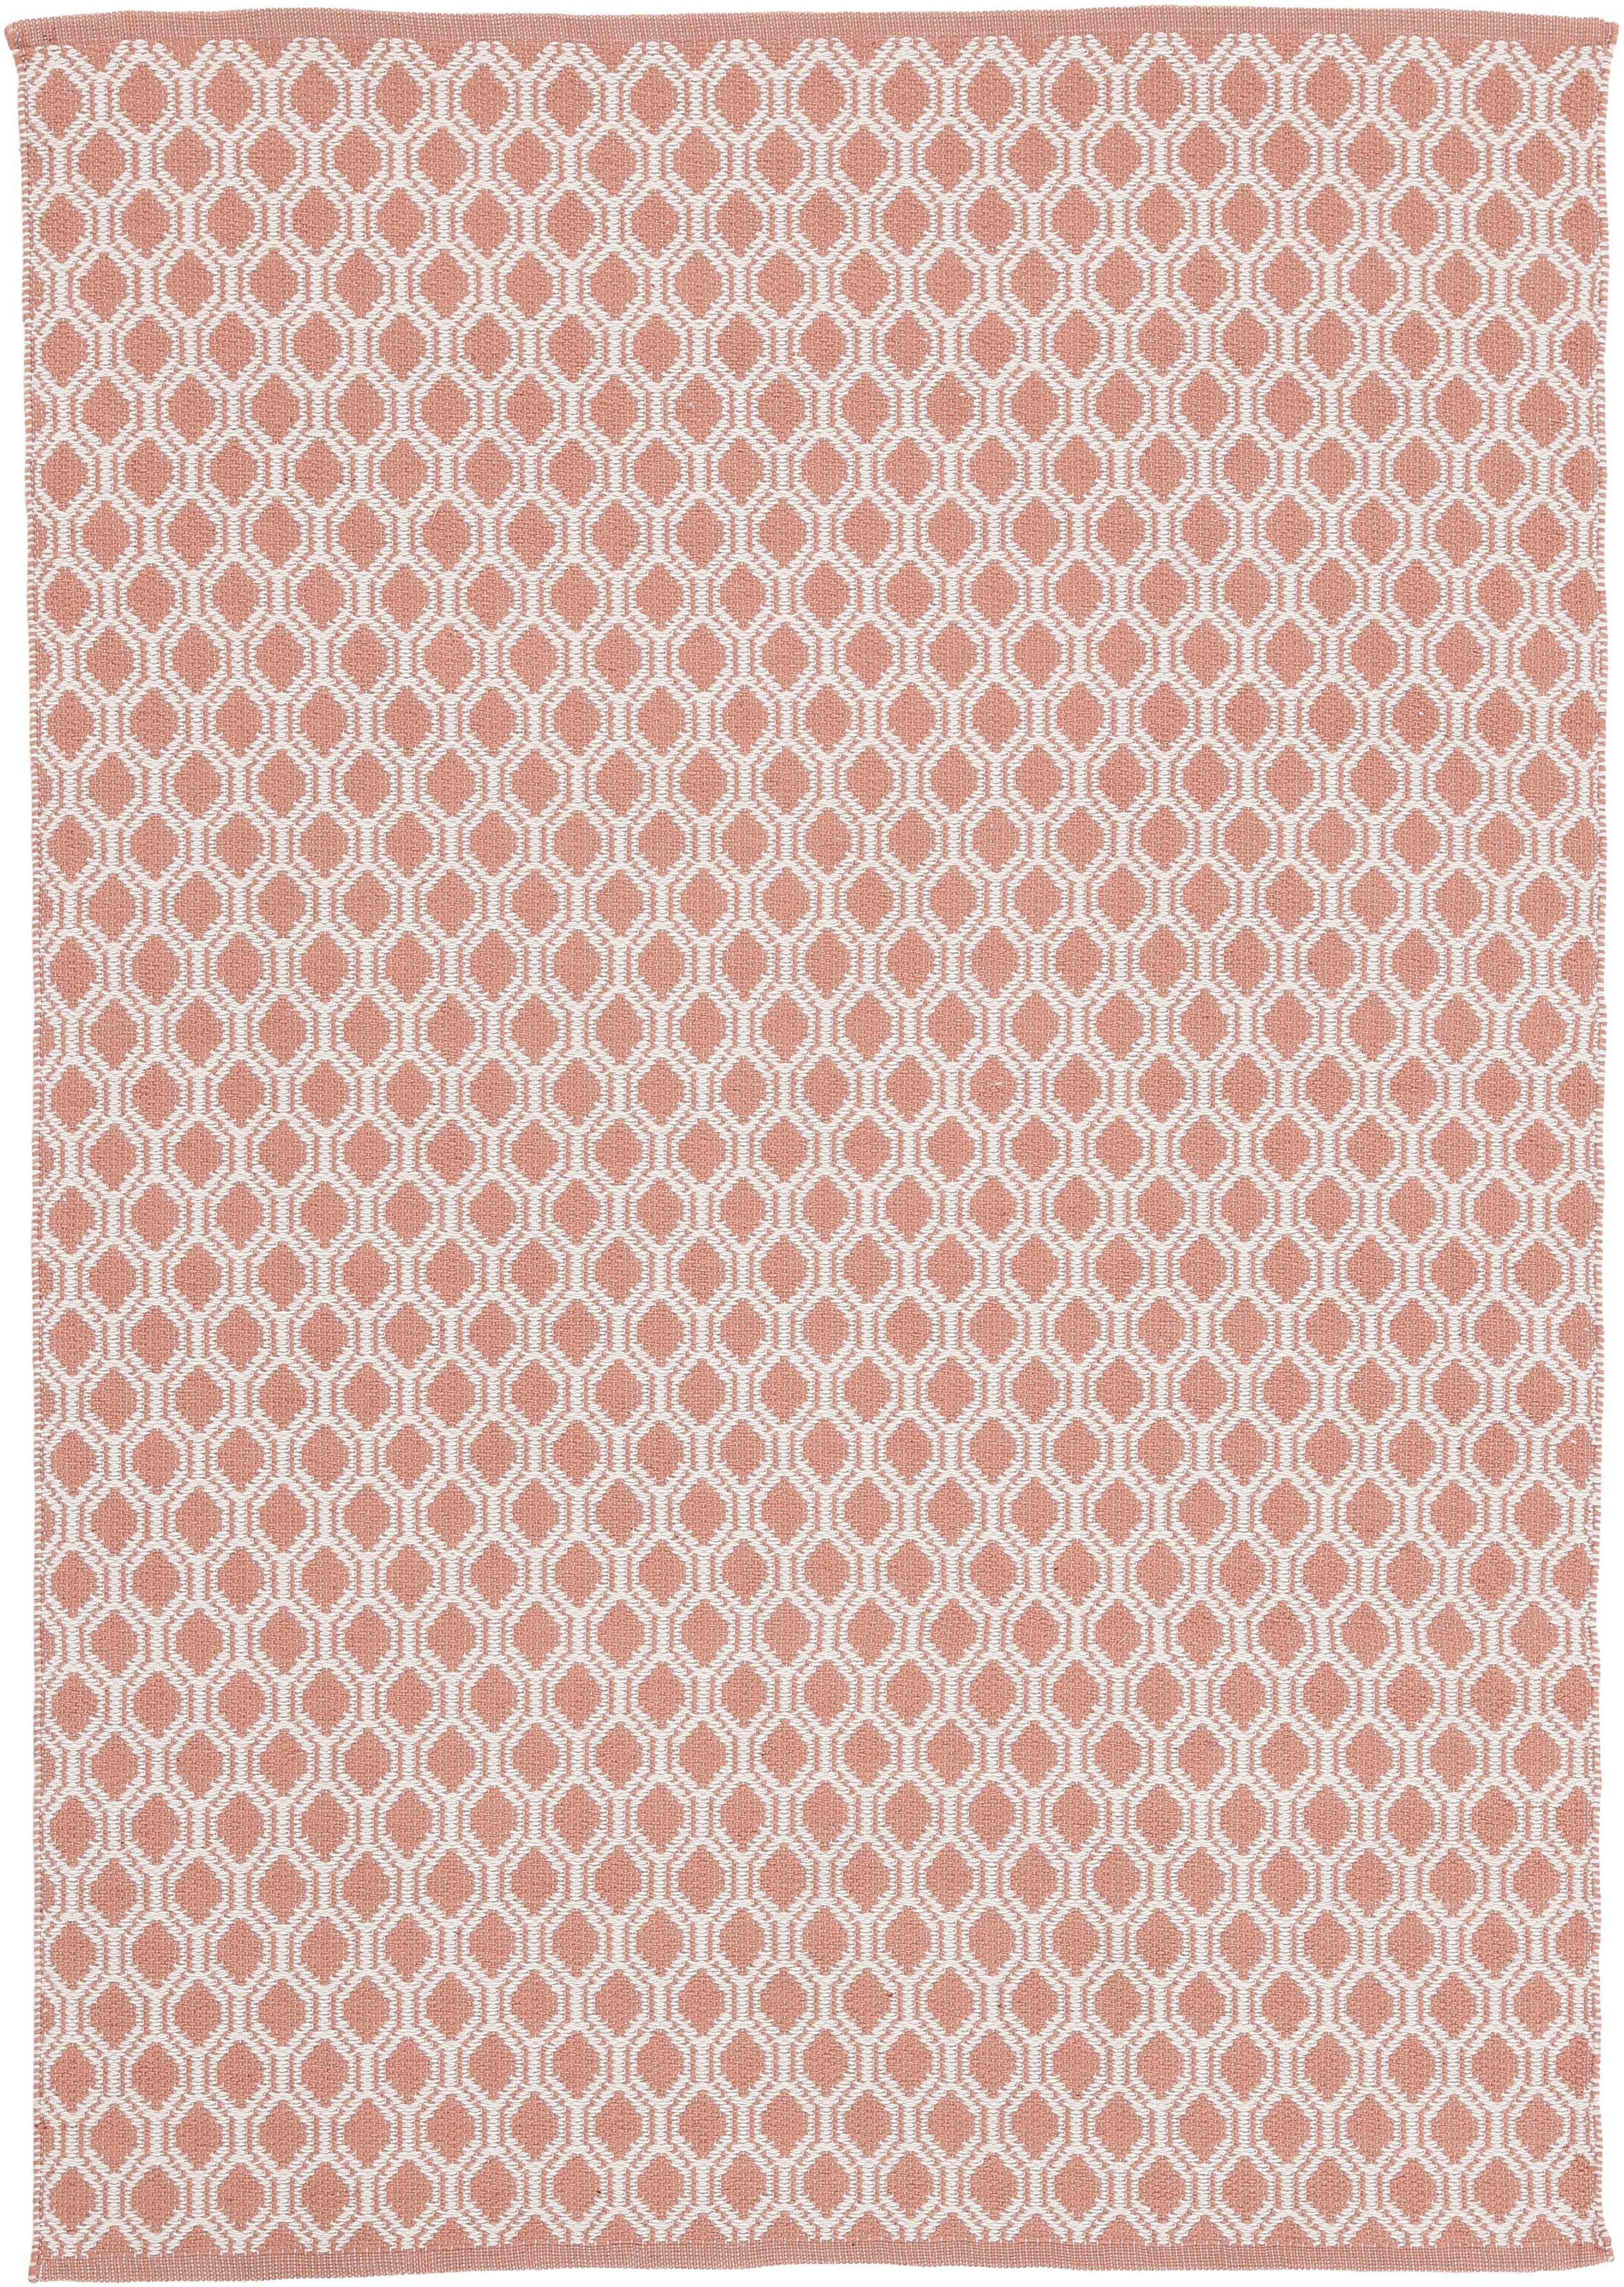 Teppich Frida 204, carpetfine, rechteckig, Höhe: 7 mm, Wendeteppich, 100% recyceltem Material (PET), Flachgewebe, Sisal Optik rosa | Kurzflor-Teppiche